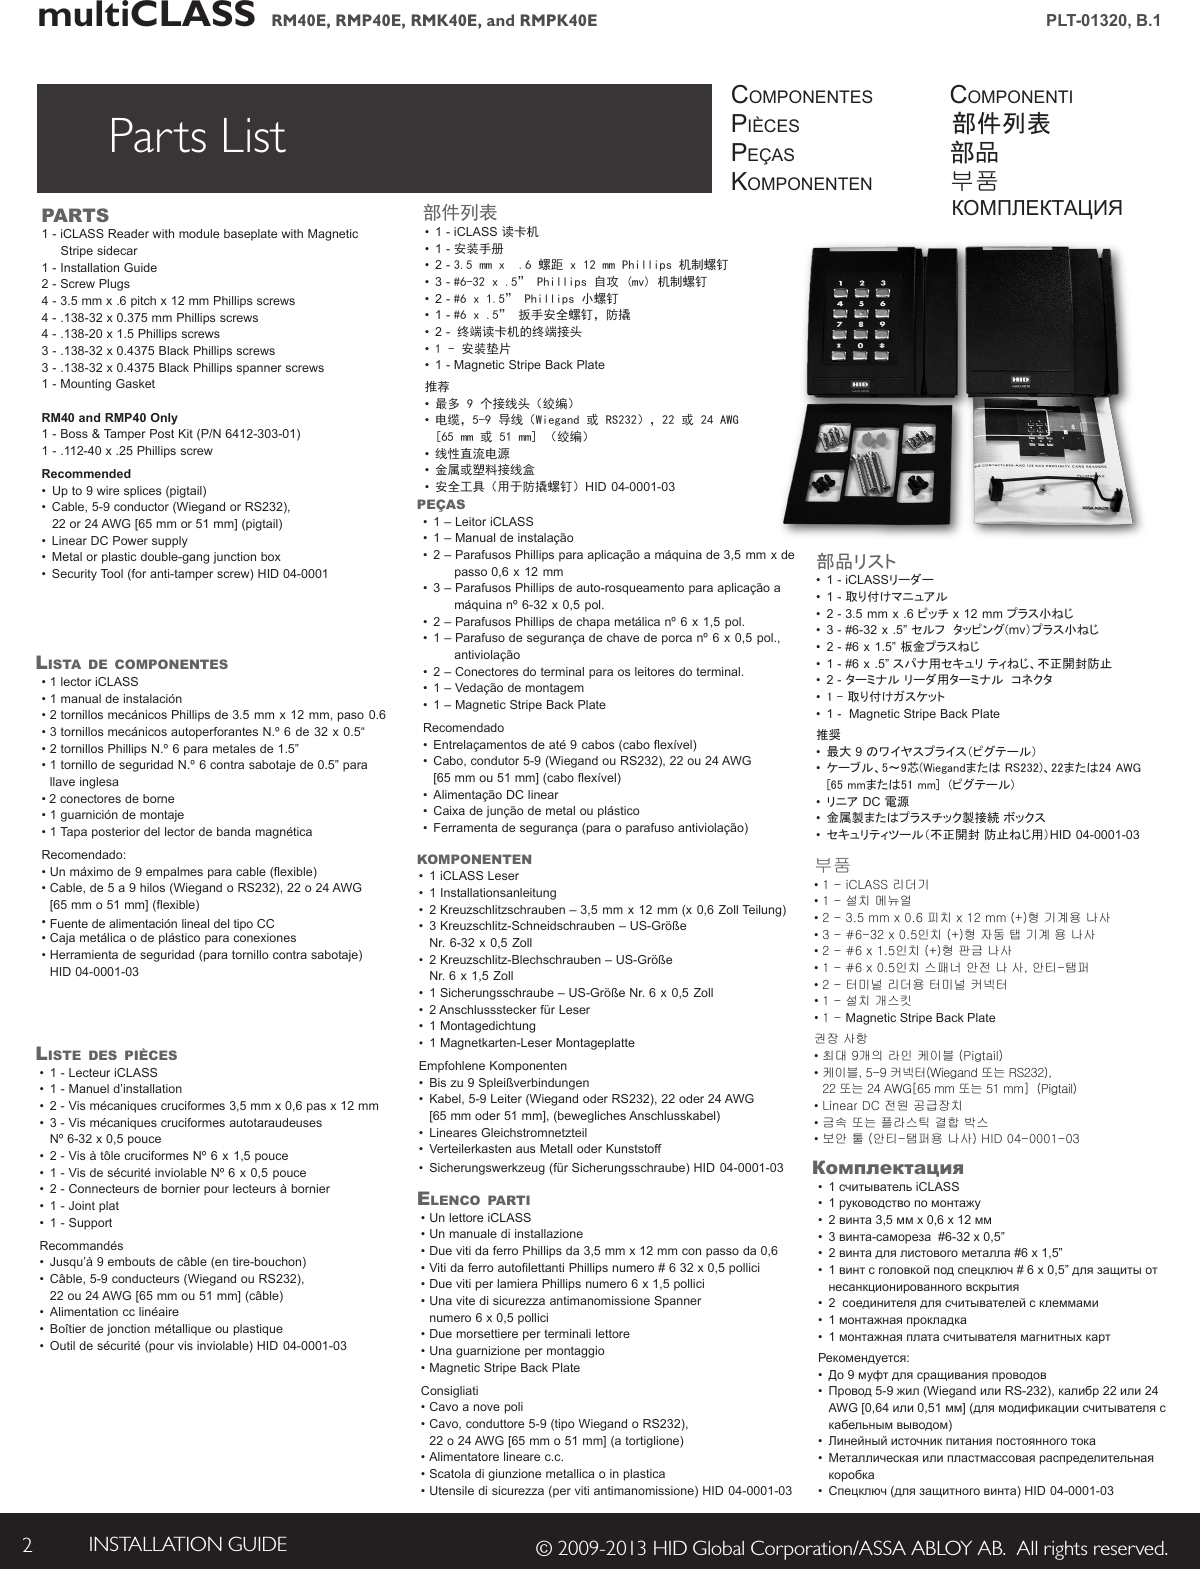 multiCLASS   RM40E, RMP40E, RMK40E, and RMPK40E INSTALLATION GUIDE2© 2009-2013 HID Global Corporation/ASSA ABLOY AB.  All rights reserved.PLT-01320, B.1Parts List componentespiècespeçasKomponentencomponenti部件列表部品부품КОМПЛЕКТАЦИЯPARTS1 - iCLASS Reader with module baseplate with Magnetic       Stripe sidecar 1 - Installation Guide2 - Screw Plugs4 - 3.5 mm x .6 pitch x 12 mm Phillips screws4 - .138-32 x 0.375 mm Phillips screws4 - .138-20 x 1.5 Phillips screws3 - .138-32 x 0.4375 Black Phillips screws3 - .138-32 x 0.4375 Black Phillips spanner screws1 - Mounting GasketRM40 and RMP40 Only1 - Boss &amp; Tamper Post Kit (P/N 6412-303-01)1 - .112-40 x .25 Phillips screwRecommended• Up to 9 wire splices (pigtail)• Cable,5-9conductor(WiegandorRS232), 22or24AWG[65mmor51mm](pigtail)• LinearDCPowersupply• Metalorplasticdouble-gangjunctionbox• SecurityTool(foranti-tamperscrew)HID04-0001LiSTA de comPonenTeS•1lectoriCLASS•1manualdeinstalación•2tornillosmecánicosPhillipsde3.5 mm x 12 mm,paso 0.6• 3 tornillosmecánicosautoperforantesN.º 6 de 32 x 0.5“• 2tornillosPhillipsN.º 6 para metales de 1.5”• 1tornillodeseguridadN.º 6 contrasabotajede0.5”para llave inglesa• 2 conectores de borne•1guarnicióndemontaje•1TapaposteriordellectordebandamagnéticaRecomendado:• Unmáximode9empalmesparacable(flexible)• Cable,de5a9hilos(WiegandoRS232),22o24AWG [65mmo51mm](flexible)• FuentedealimentaciónlinealdeltipoCC• Cajametálicaodeplástico para conexiones• Herramientadeseguridad (paratornillocontrasabotaje) HID04-0001-03LiSTe deS PièceS• 1 - Lecteur iCLASS• 1 - Manuel d’installation• 2-Vismécaniquescruciformes3,5mmx0,6pasx12mm• 3-Vismécaniquescruciformesautotaraudeuses Nº6-32x0,5pouce• 2-VisàtôlecruciformesNº 6 x 1,5pouce• 1-VisdesécuritéinviolableNº6 x 0,5 pouce• 2 - Connecteurs de bornier pour lecteurs à bornier• 1-Jointplat• 1-SupportRecommandés• Jusqu’à9emboutsdecâble(entire-bouchon)• Câble,5-9conducteurs(WiegandouRS232), 22ou24AWG[65mmou51mm](câble)• Alimentationcclinéaire• Boîtierdejonctionmétallique ouplastique• Outildesécurité(pourvisinviolable)HID 04-0001-03PeçAS• 1 – Leitor iCLASS• 1 – Manual de instalação• 2–ParafusosPhillipsparaaplicaçãoamáquinade3,5 mm x de  passo0,6 x 12 mm• 3–ParafusosPhillipsdeauto-rosqueamentoparaaplicaçãoa    máquinanº 6-32 x 0,5 pol. • 2–ParafusosPhillipsdechapa metálicanº 6 x 1,5 pol. • 1–Parafusodesegurançadechavedeporcanº 6 x 0,5 pol.,   antiviolação • 2 – Conectores do terminal para os leitores do terminal. • 1–Vedaçãodemontagem• 1–MagneticStripeBackPlateRecomendado• Entrelaçamentosdeaté9 cabos(caboflexível)• Cabo,condutor5-9(WiegandouRS232),22ou24AWG [65mmou51mm] (caboflexível)• AlimentaçãoDClinear• Caixadejunçãodemetalou plástico• Ferramentadesegurança(paraoparafusoantiviolação) HID 04-0001-03komPonenTen • 1 iCLASS Leser• 1 Installationsanleitung• 2 Kreuzschlitzschrauben – 3,5 mm x 12 mm (x 0,6 Zoll Teilung)• 3 Kreuzschlitz-Schneidschrauben – US-Größe     Nr. 6-32 x 0,5 Zoll• 2 Kreuzschlitz-Blechschrauben – US-Größe     Nr. 6 x 1,5 Zoll• 1 Sicherungsschraube – US-Größe Nr. 6 x 0,5 Zoll• 2AnschlusssteckerfürLeser• 1Montagedichtung• 1 Magnetkarten-Leser MontageplatteEmpfohleneKomponenten• Bis zu 9 Spleißverbindungen • Kabel,5-9Leiter(WiegandoderRS232),22oder24AWG [65mmoder51mm],(beweglichesAnschlusskabel)• Lineares Gleichstromnetzteil• VerteilerkastenausMetalloderKunststoff• Sicherungswerkzeug(fürSicherungsschraube) HID 04-0001-03eLenco PARTi• Un lettore iCLASS• Un manuale di installazione• DuevitidaferroPhillipsda3,5mmx12mmconpassoda0,6• VitidaferroautofilettantiPhillipsnumero#632x0,5pollici• DuevitiperlamieraPhillipsnumero6x1,5pollici• Una vite di sicurezza antimanomissione Spanner  numero6x0,5pollici• Duemorsettiereperterminalilettore•Unaguarnizionepermontaggio•MagneticStripeBackPlateConsigliati• Cavo a nove poli• Cavo,conduttore5-9(tipoWiegandoRS232), 22o24AWG[65mmo51mm](atortiglione)• Alimentatore lineare c.c.• Scatola di giunzione metallica o in plastica• Utensile di sicurezza (per viti antimanomissione) HID 04-0001-03部件列表• 1 - iCLASS 读卡机• 1 - 安装手册• 2 - 3.5mmx.6螺距x12mmPhillips机制螺钉• 3 - #6-32x.5”Phillips自攻(mv)机制螺钉• 2 - #6x1.5”Phillips小螺钉• 1 - #6x.5”扳手安全螺钉，防撬• 2 -终端读卡机的终端接头• 1-安装垫片• 1 - Magnetic Stripe Back Plate 推荐• 最多9个接线头（绞编）• 电缆，5-9导线（Wiegand或RS232），22或24AWG[65mm或51mm]（绞编）• 线性直流电源• 金属或塑料接线盒• 安全工具（用于防撬螺钉）HID 04-0001-03部品リスト• 1 - iCLASSリーダー• 1 - 取り付けマニュアル• 2 - 3.5 mm x .6 ピッチ x 12 mm プラス小ねじ• 3-#6-32 x .5” セルフ  タッピング(mv）プラス小ねじ• 2-#6 x 1.5” 板金プラスねじ• 1-#6 x .5” スパナ用セキュリ ティねじ、不正開封防止• 2 - ターミナル リーダ用ターミナル  コネクタ• 1 - 取り付けガスケット• 1-MagneticStripeBackPlate推奨• 最大 9 のワイヤスプライス（ピグテール）• ケーブル、5～9芯(Wiegandまたは RS232)、22または24 AWG [65 mmまたは51 mm]  (ピグテール)• リニア DC電源• 金属製またはプラスチック製接続 ボックス• セキュリティツール（不正開封 防止ねじ用）HID 04-0001-03부품• 1 - iCLASS 리더기• 1 - 설치 메뉴얼• 2 - 3.5 mm x 0.6 피치 x 12 mm (+)형 기계용 나사• 3 - #6-32 x 0.5인치 (+)형 자동 탭 기계 용 나사 • 2 - #6 x 1.5인치 (+)형 판금 나사• 1 - #6 x 0.5인치 스패너 안전 나 사, 안티-탬퍼 • 2 - 터미널 리더용 터미널 커넥터• 1 - 설치 개스킷• 1 - Magnetic Stripe Back Plate권장 사항• 최대 9개의 라인 케이블 (Pigtail)• 케이블, 5-9 커넥터(Wiegand 또는 RS232),  22 또는 24 AWG[65 mm 또는 51 mm]  (Pigtail)• Linear DC 전원 공급장치• 금속 또는 플라스틱 결합 박스• 보안 툴 (안티-탬퍼용 나사) HID 04-0001-03Комплектация• 1считывательiCLASS• 1руководствопомонтажу• 2винта3,5ммx0,6x12мм• 3винта-самореза#6-32x0,5”• 2винтадлялистовогометалла#6x1,5”• 1винтсголовкойподспецключ#6x0,5”длязащитыотнесанкционированноговскрытия• 2соединителядлясчитывателейсклеммами• 1монтажнаяпрокладка• 1монтажнаяплатасчитывателямагнитныхкартРекомендуется:• До9муфтдлясращиванияпроводов• Провод5-9жил(WiegandилиRS-232),калибр22или24AWG[0,64или0,51мм](длямодификациисчитывателяскабельнымвыводом)• Линейныйисточникпитанияпостоянноготока• Металлическаяилипластмассоваяраспределительнаякоробка• Спецключ(длязащитноговинта)HID 04-0001-03